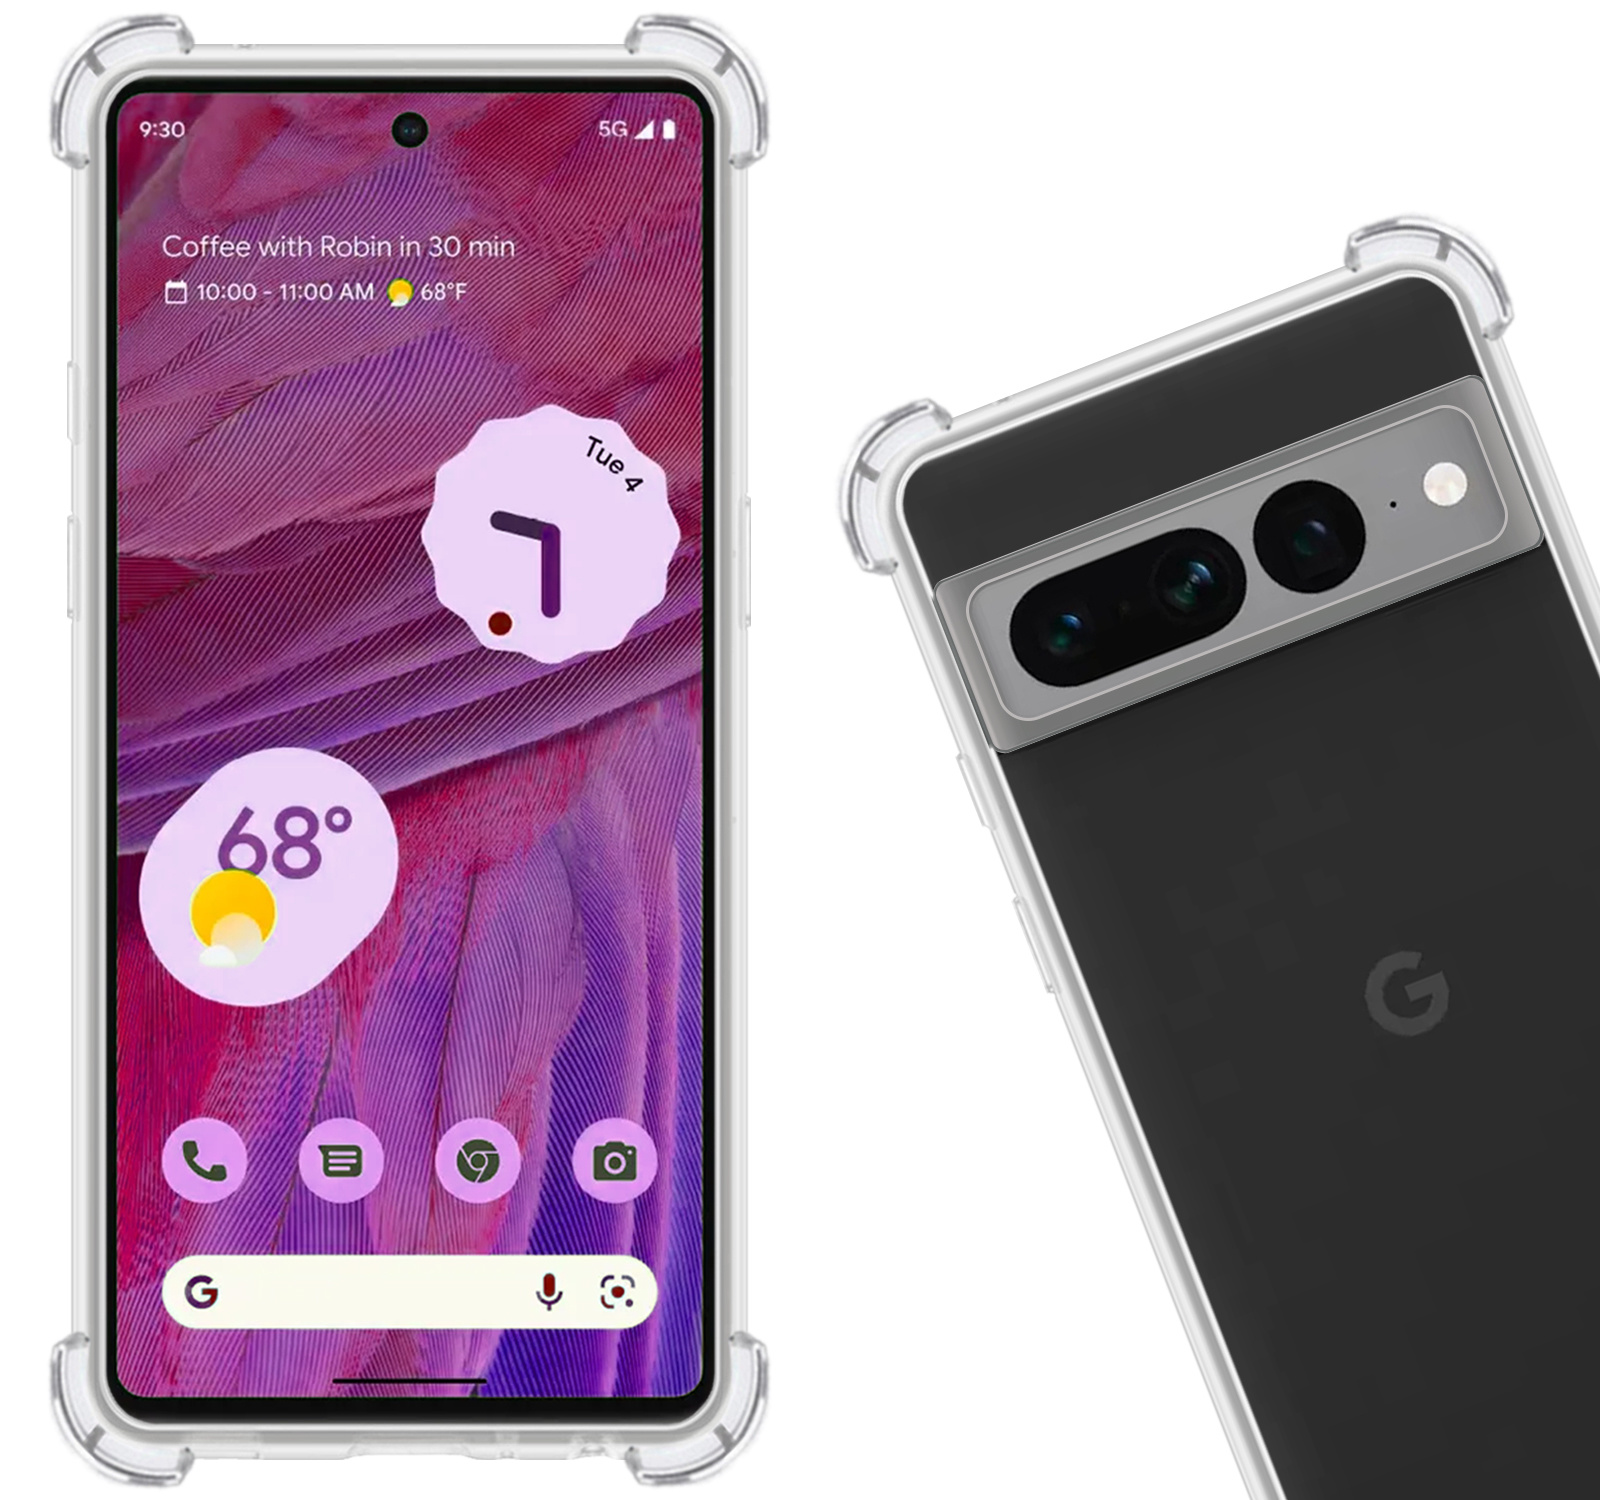 Nomfy Google Pixel 7 Pro Hoesje Shock Proof Cover Transparant Case Shockproof - Google Pixel 7 Pro Hoes Transparant Shock Proof Back Case